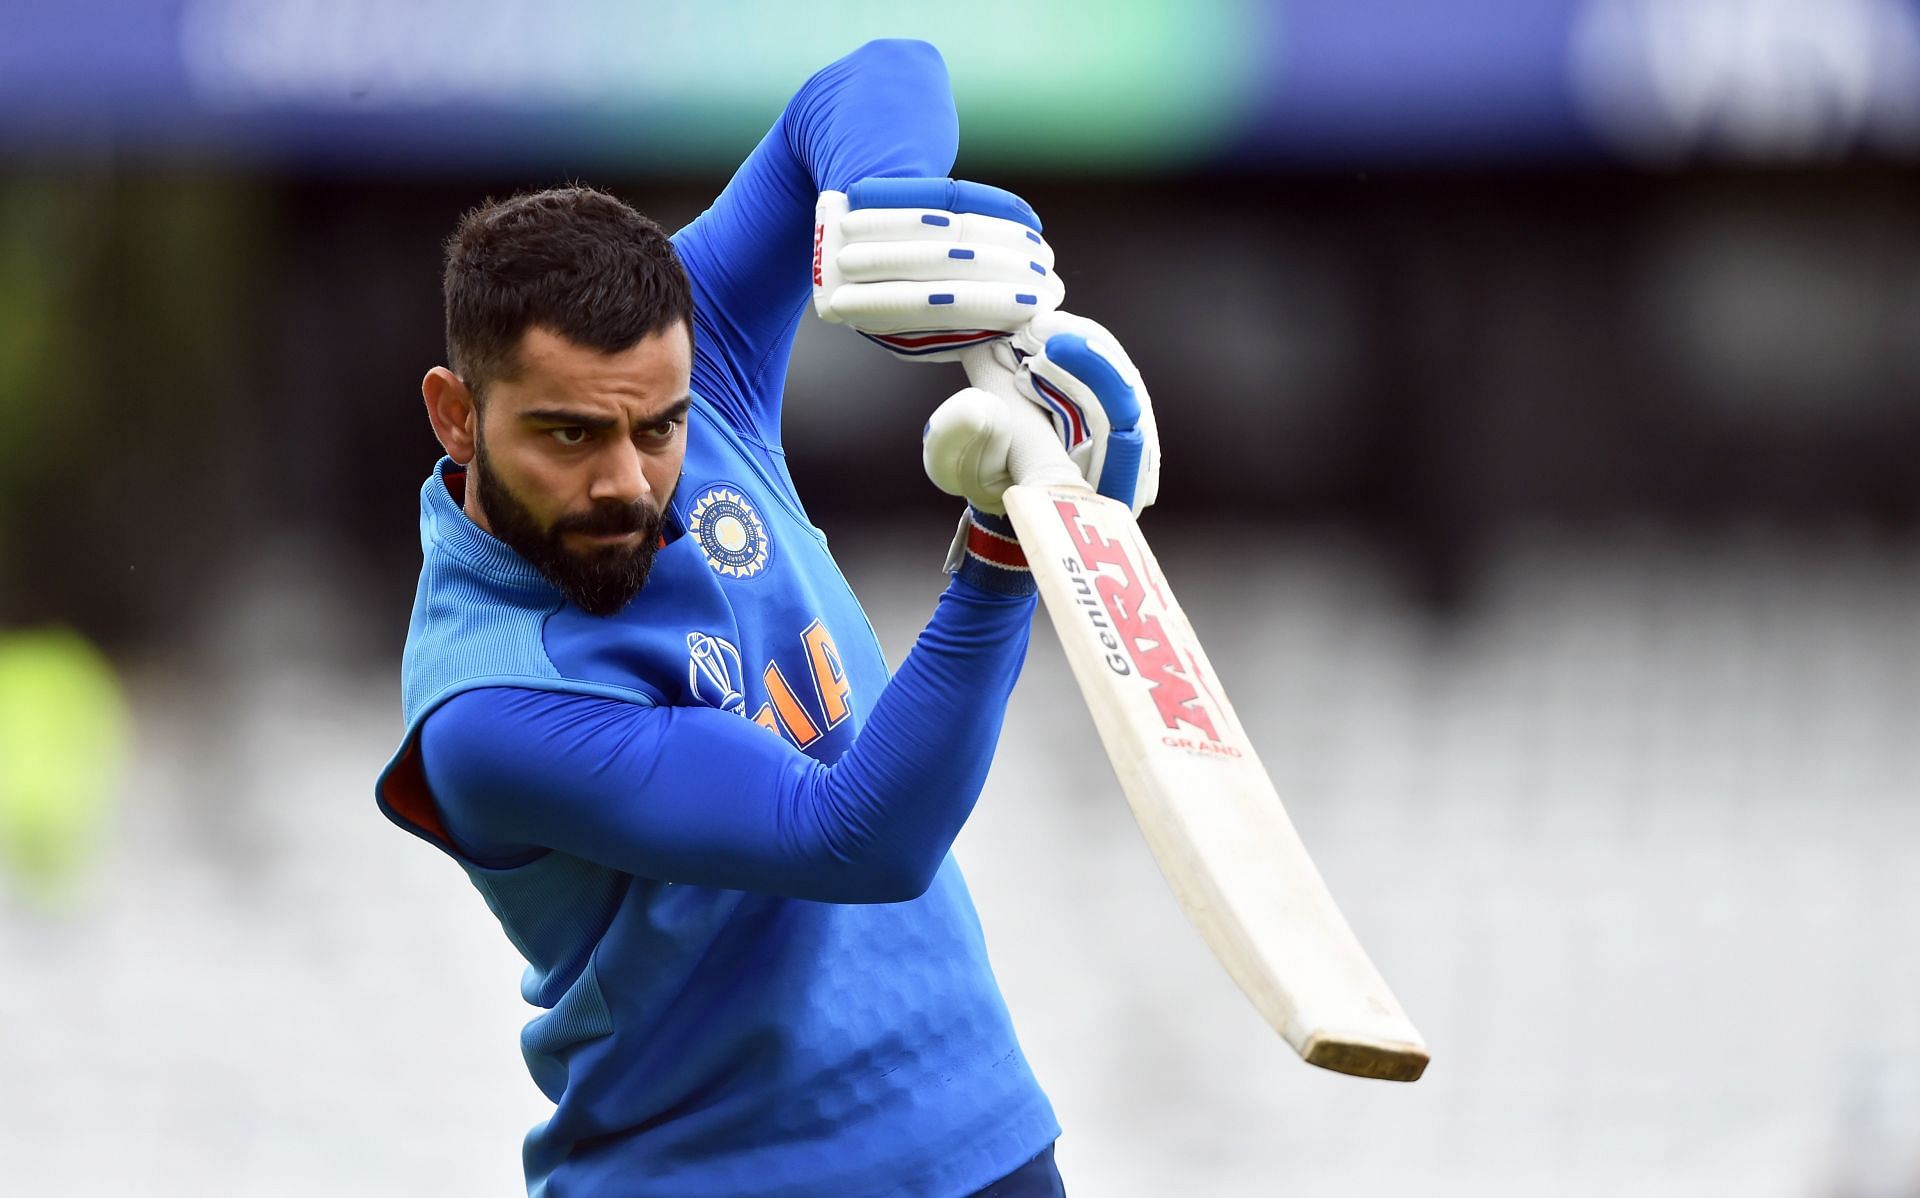 Sri Lanka v India - ICC Cricket World Cup 2019